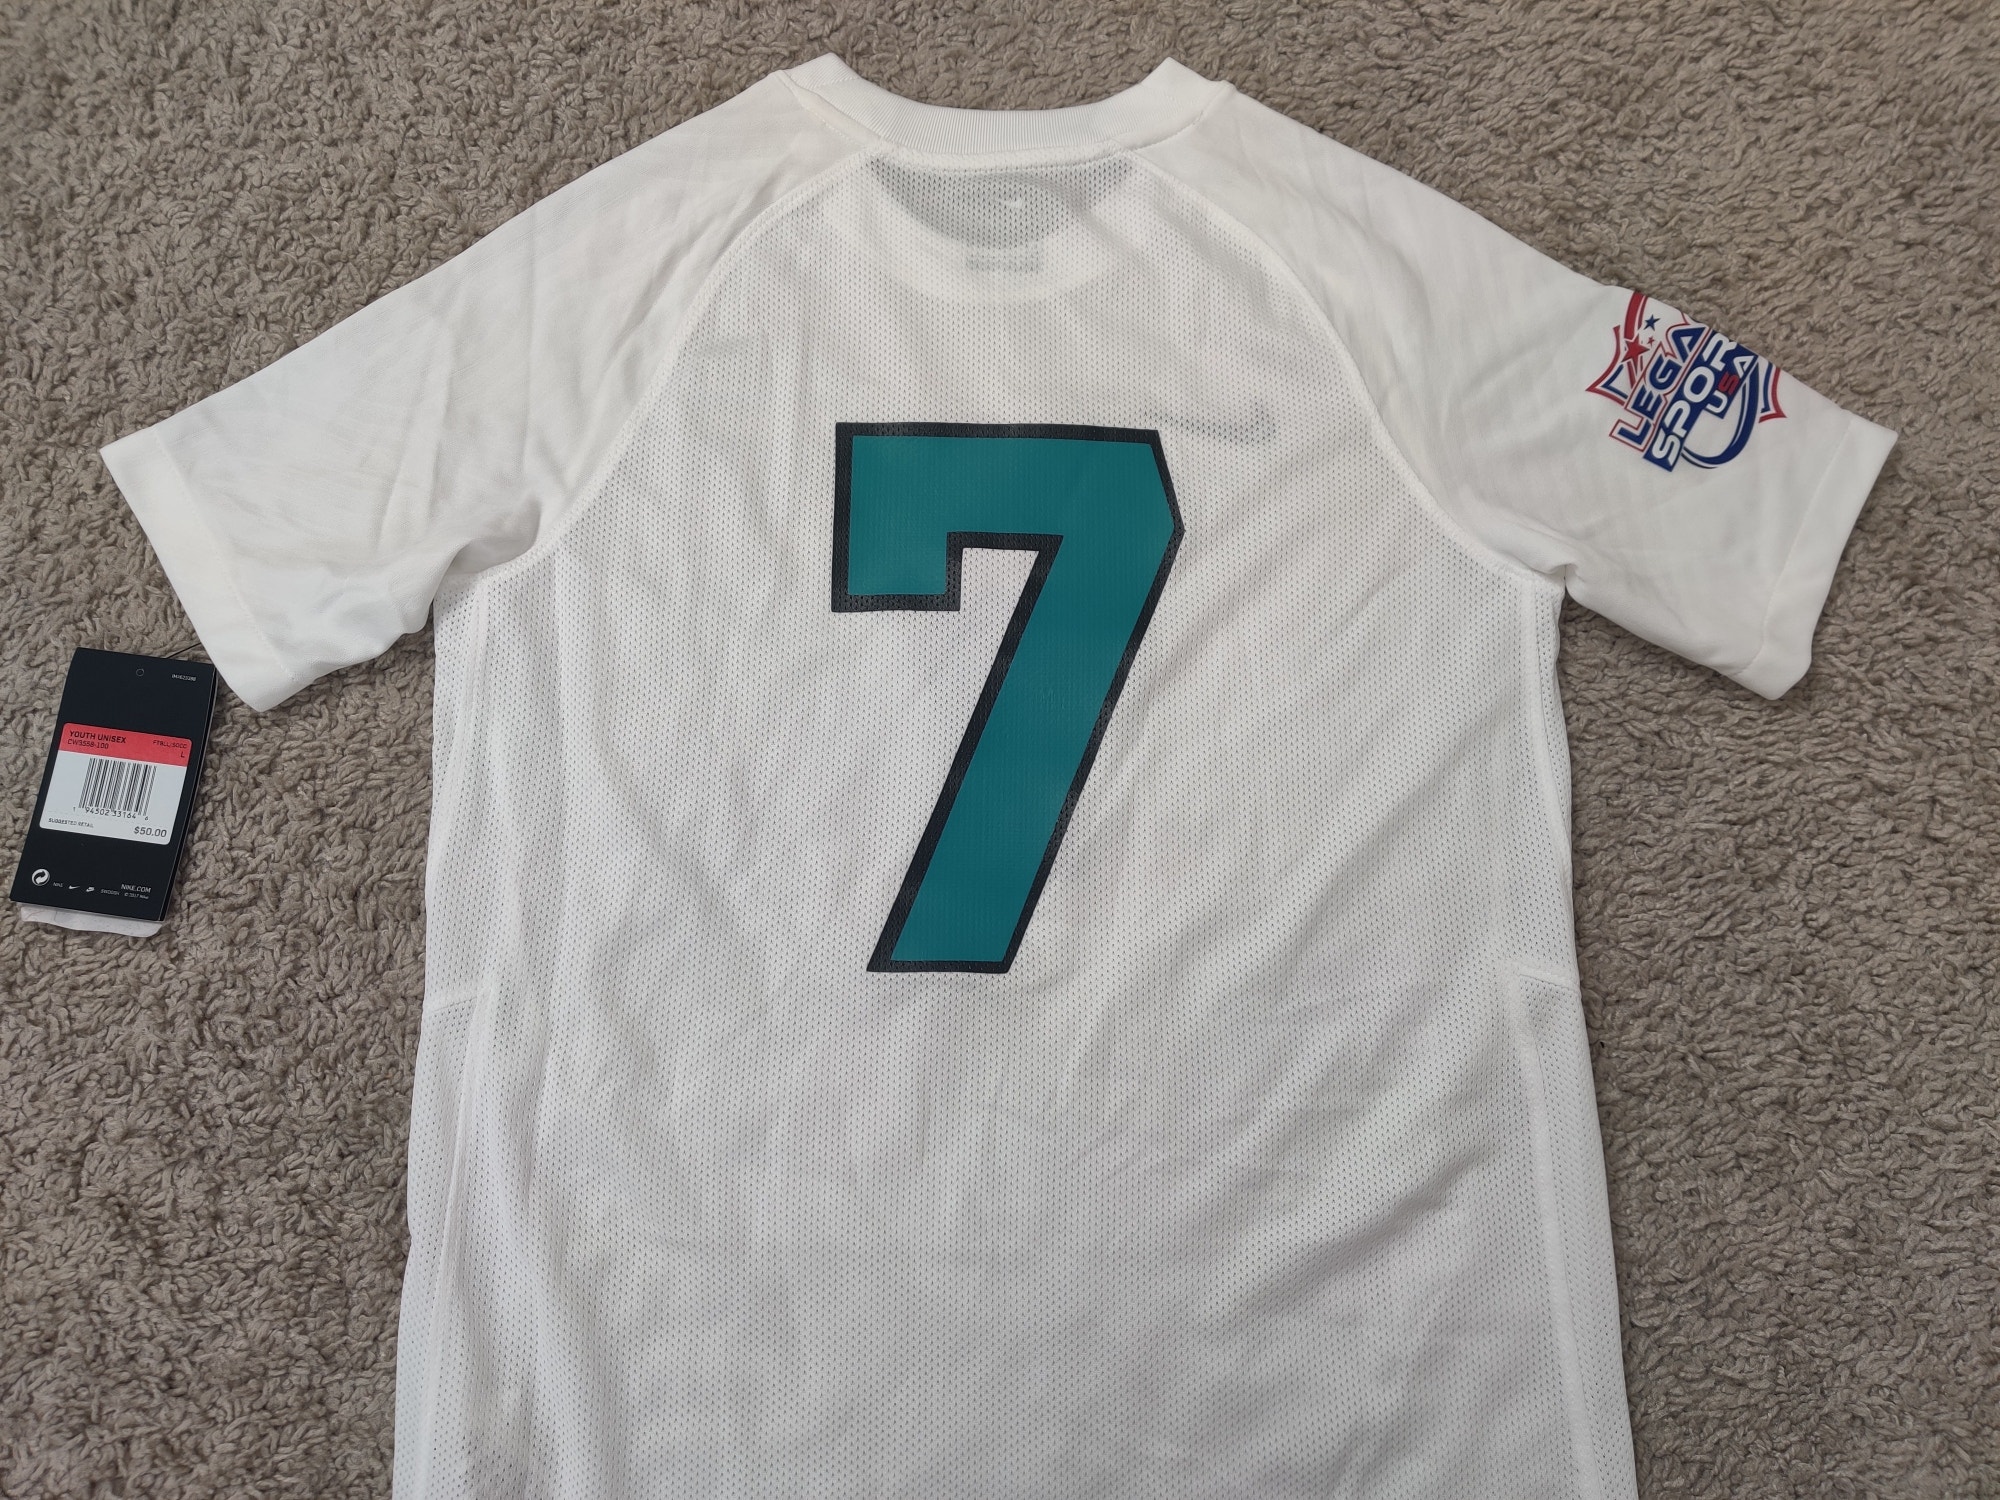 (V) NEW Nike Dri-Fit Youth Arsenal Arizona Soccer Club #7 shirt jersey sz L - Picture 9 of 12